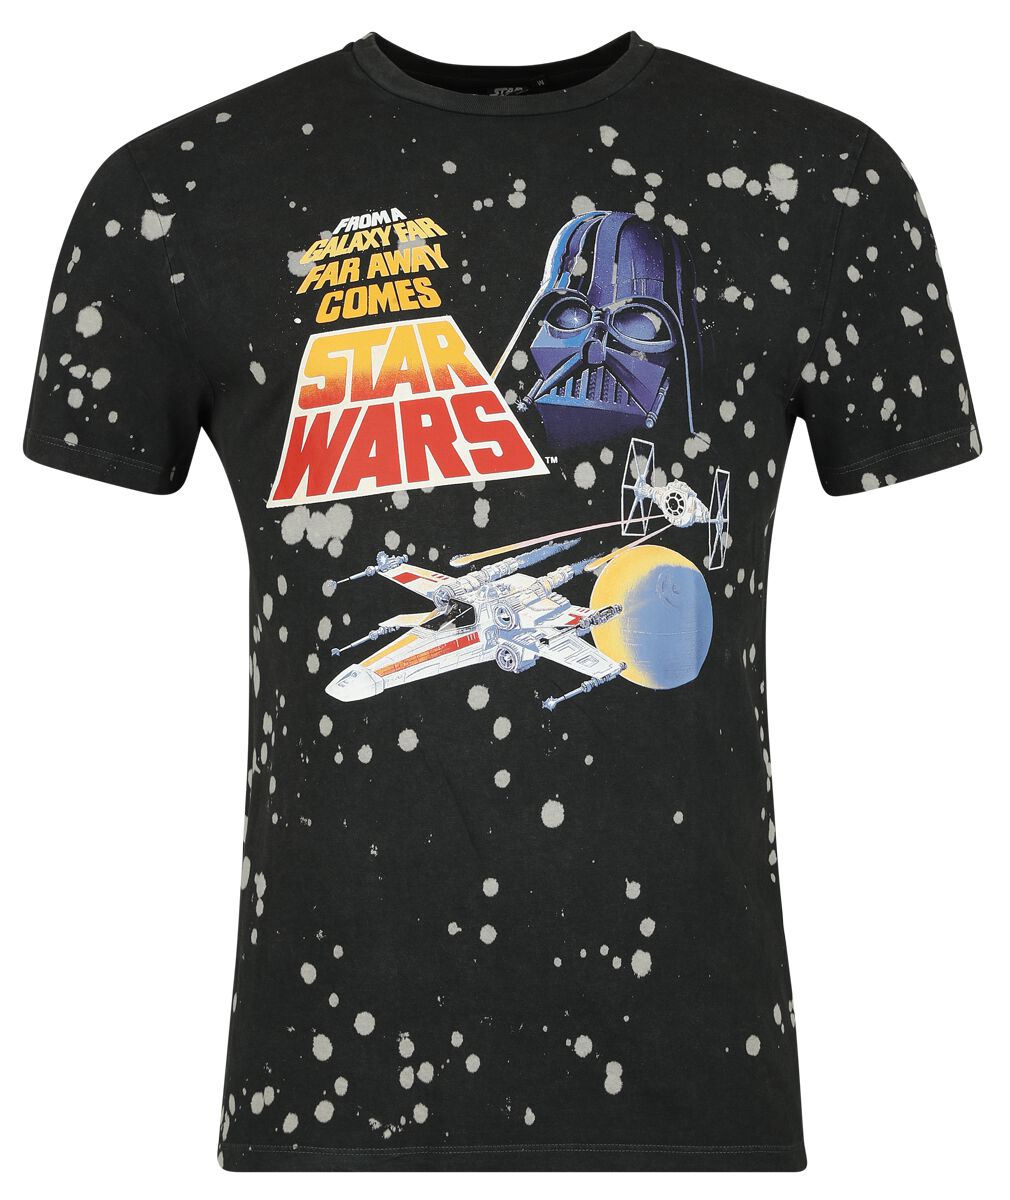 Star Wars Classic - Space T-Shirt schwarz in L